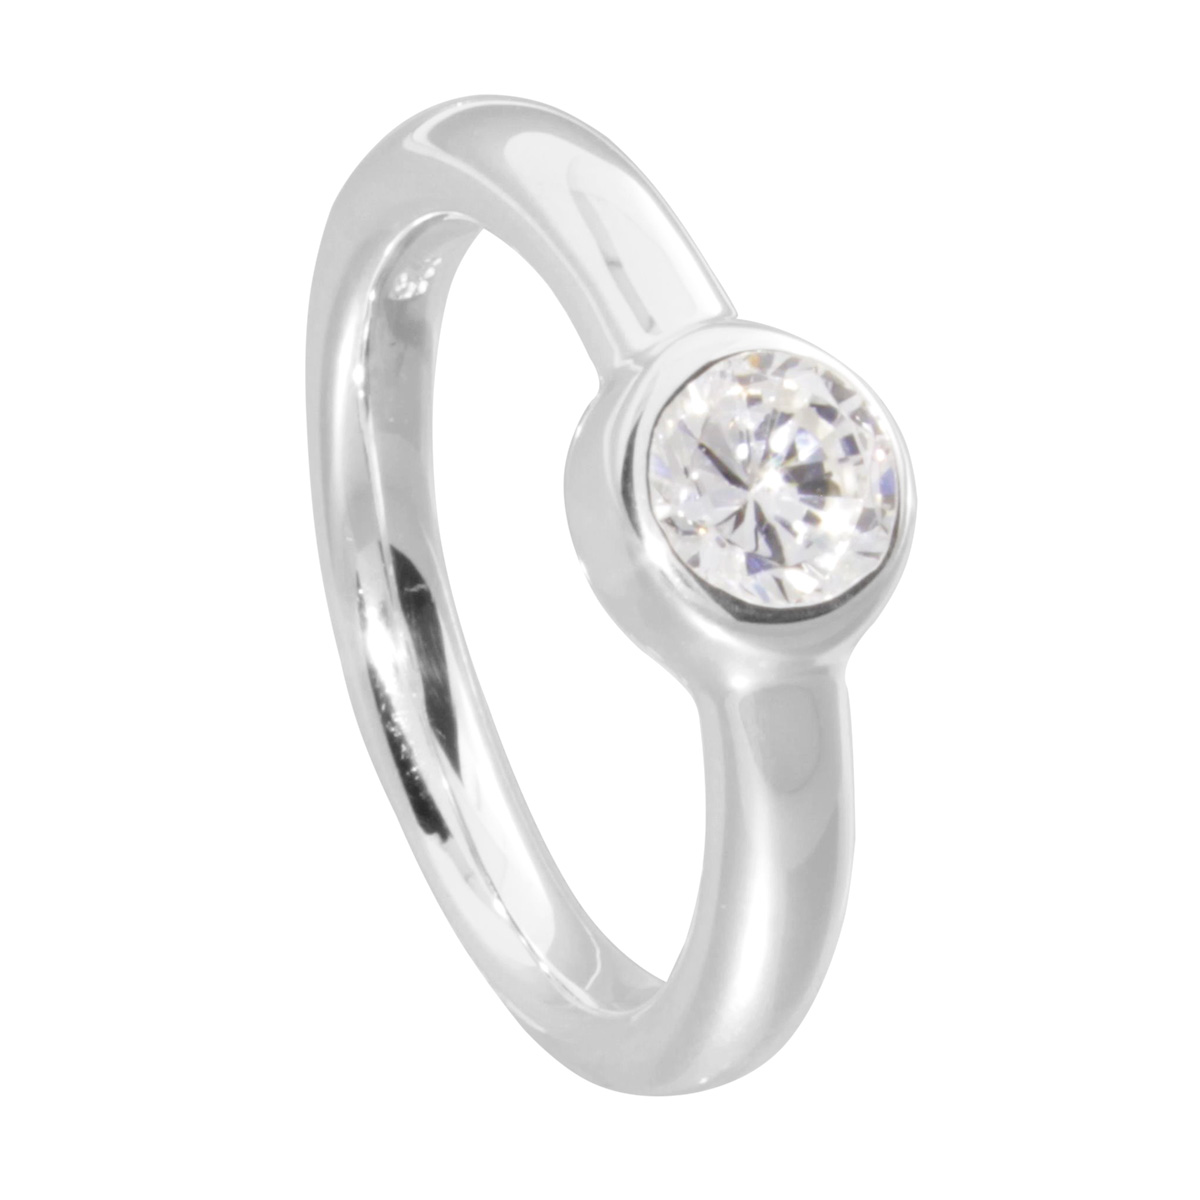 Ring Silber 925/000, Zirkonia -Größe wählbar-